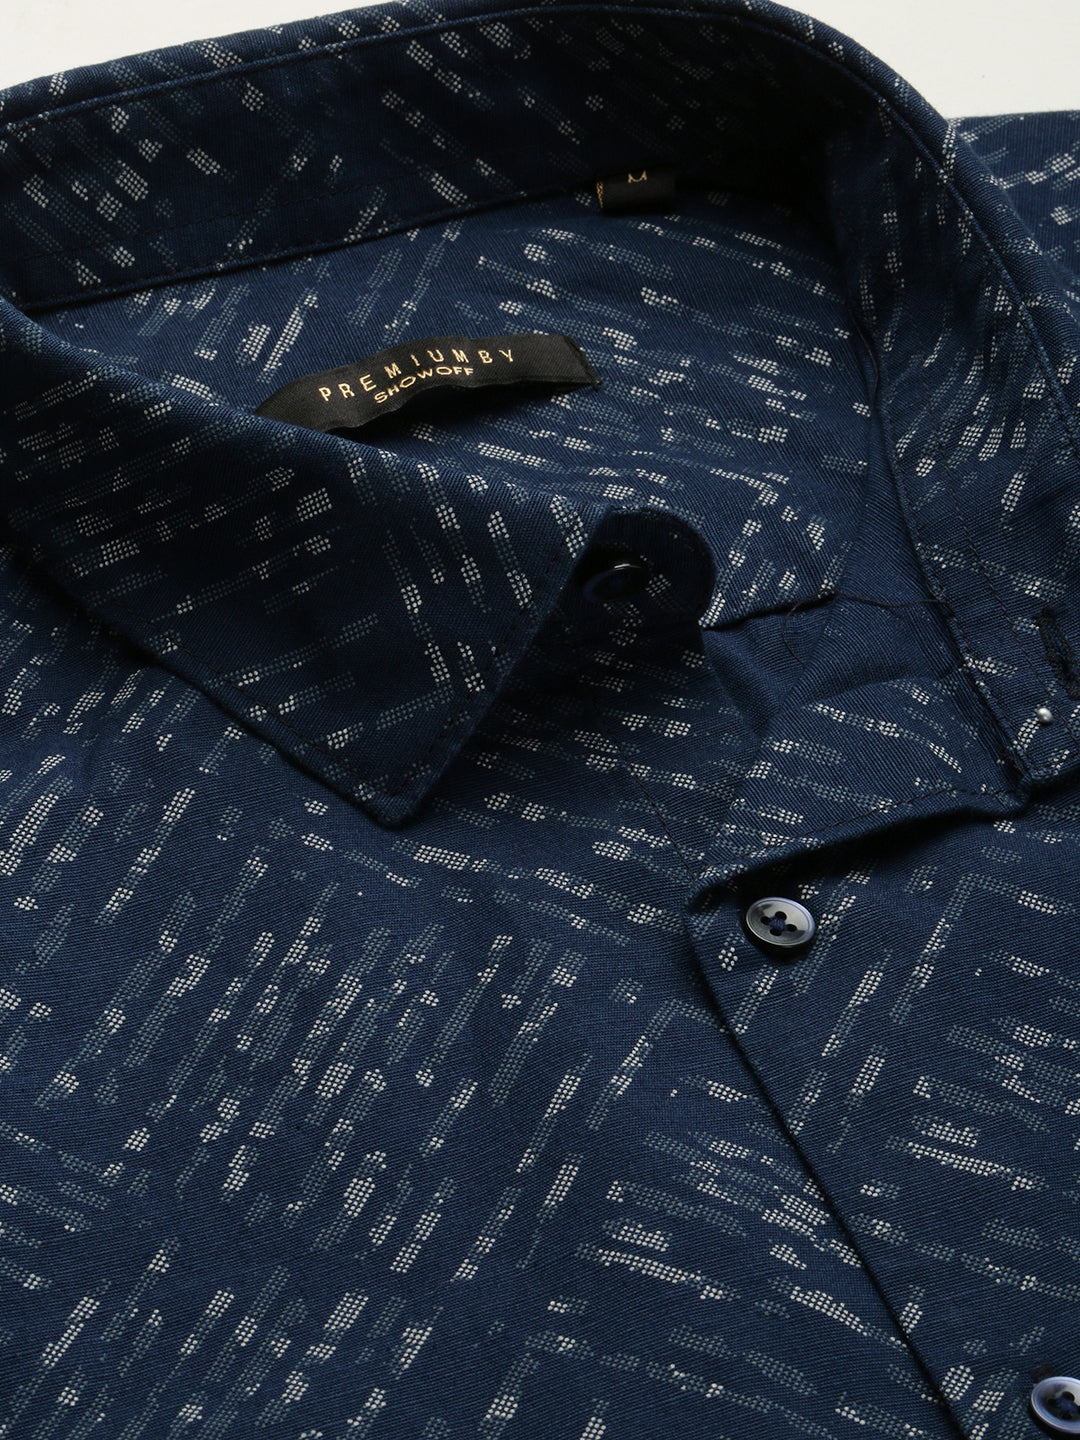 Men Navy Blue Spread Collar Geometric Shirt